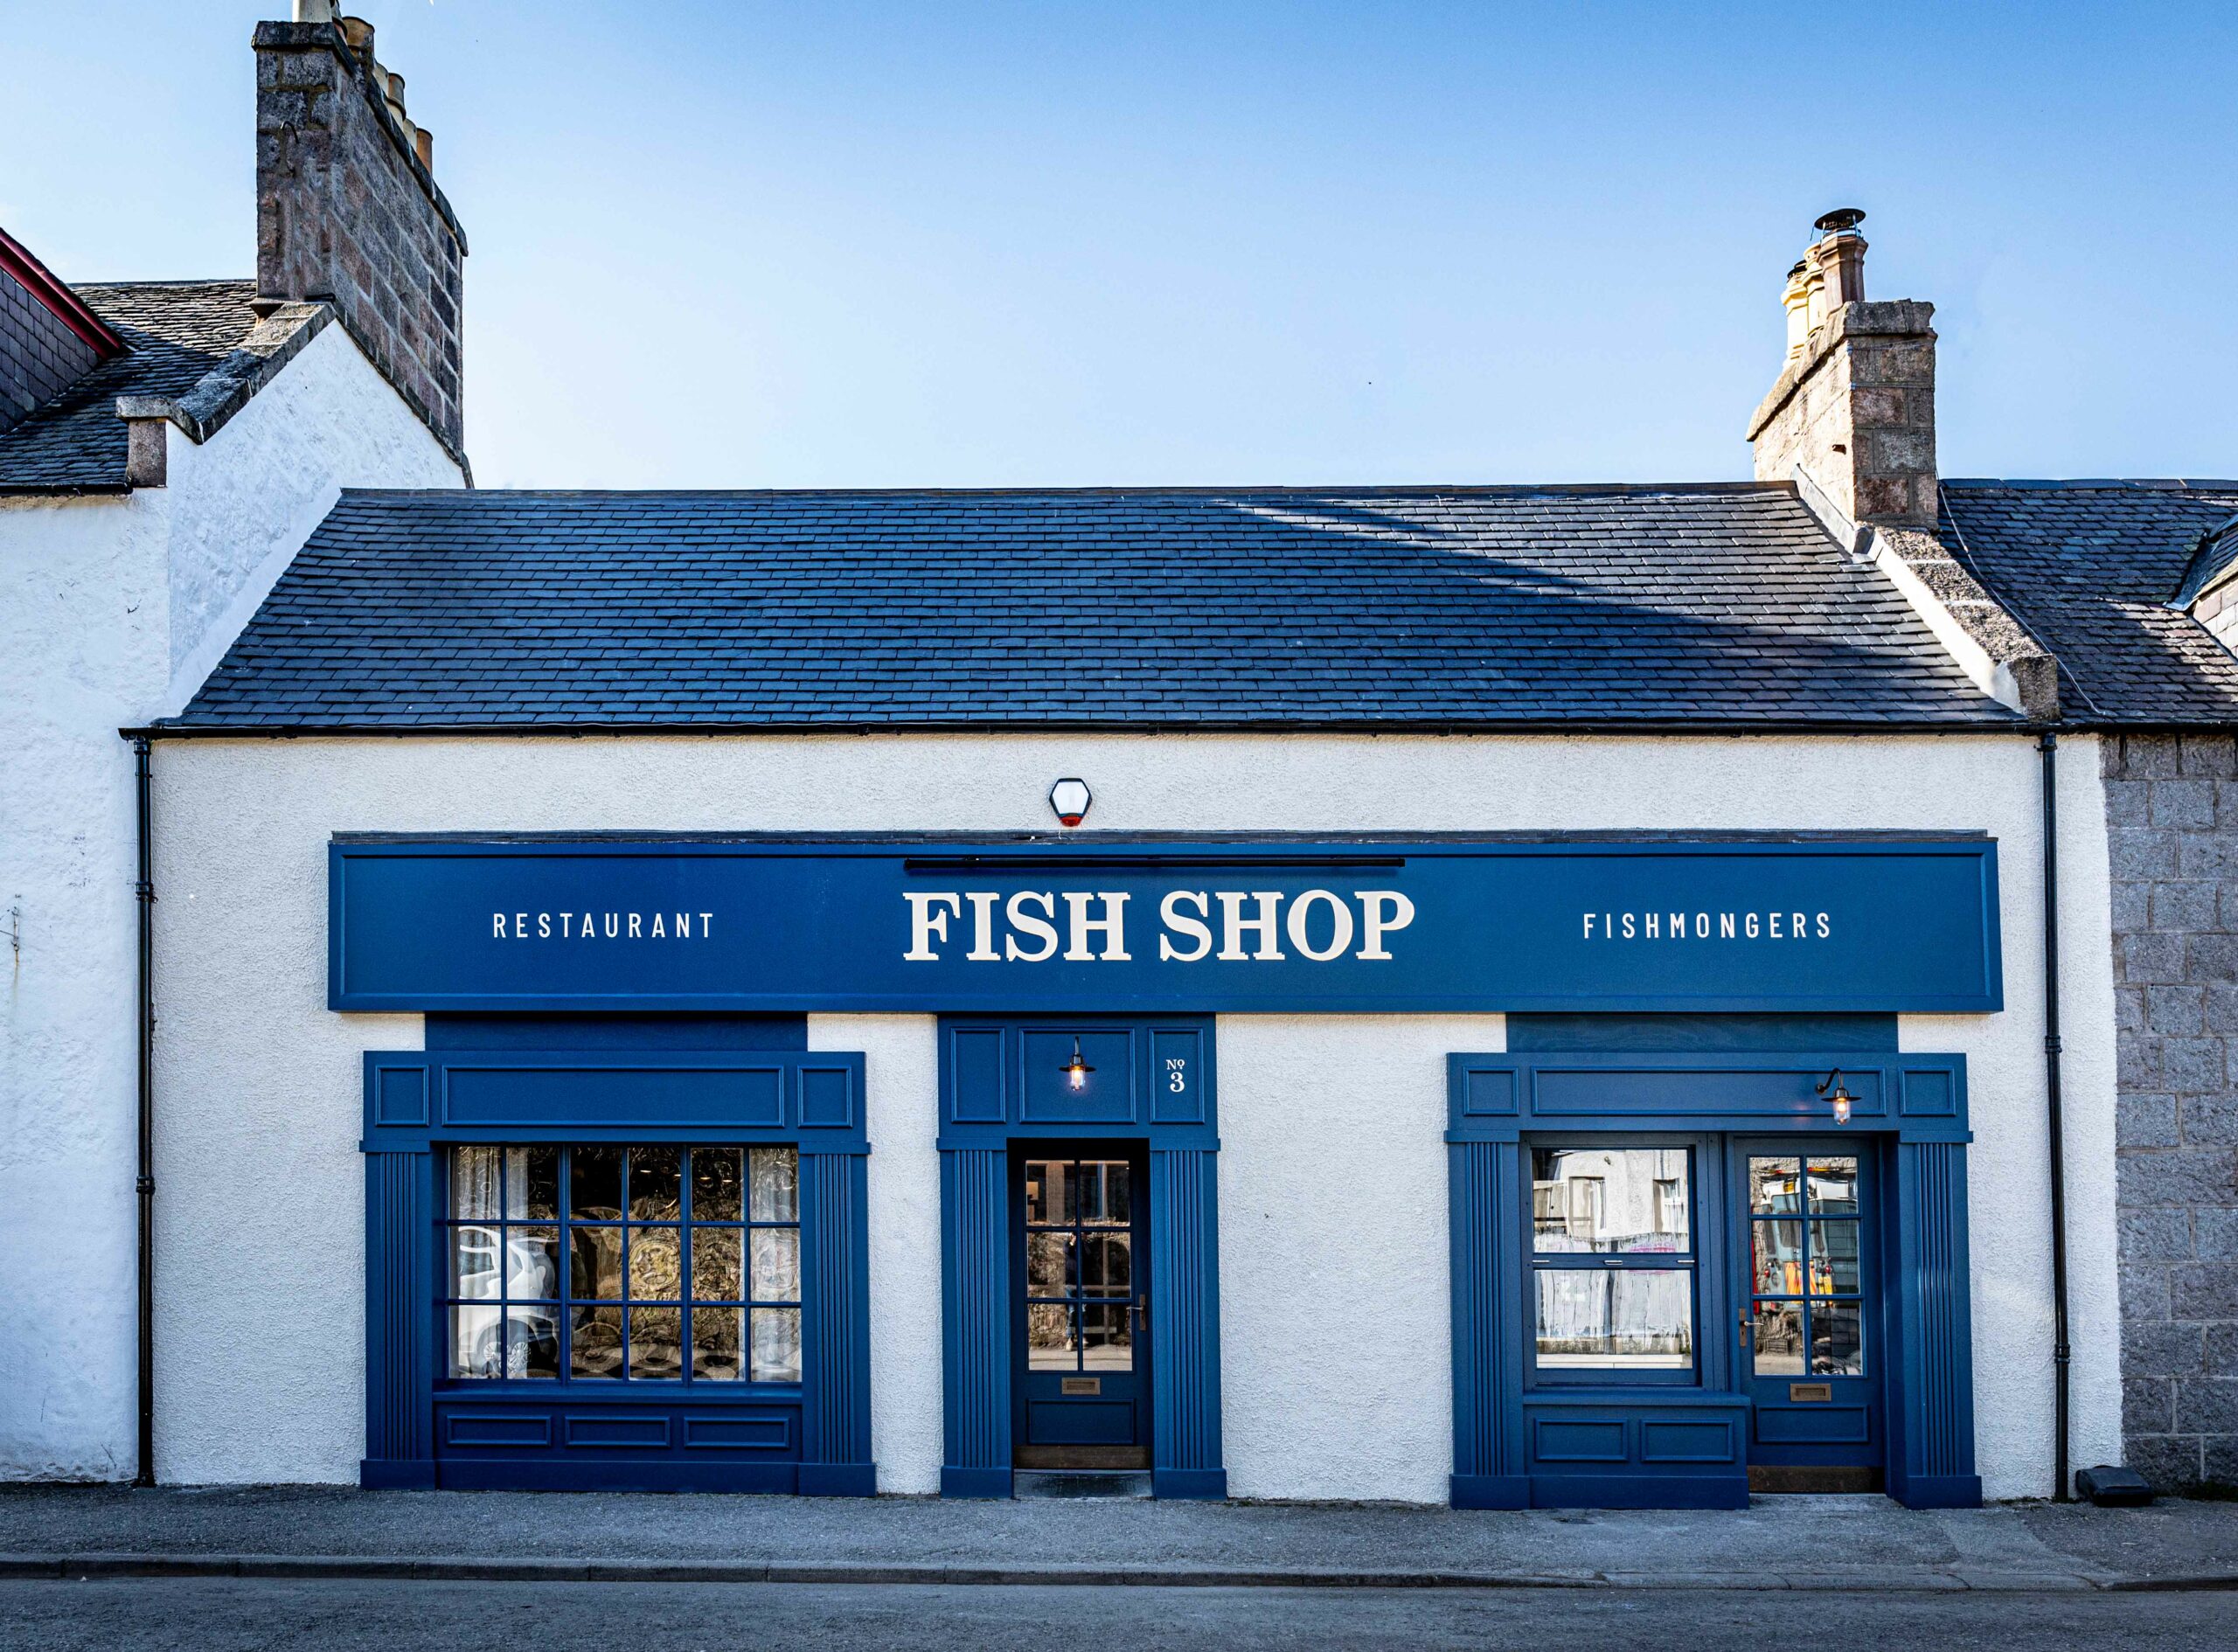 Home - Fish Shop Restaurant & Fishmongers